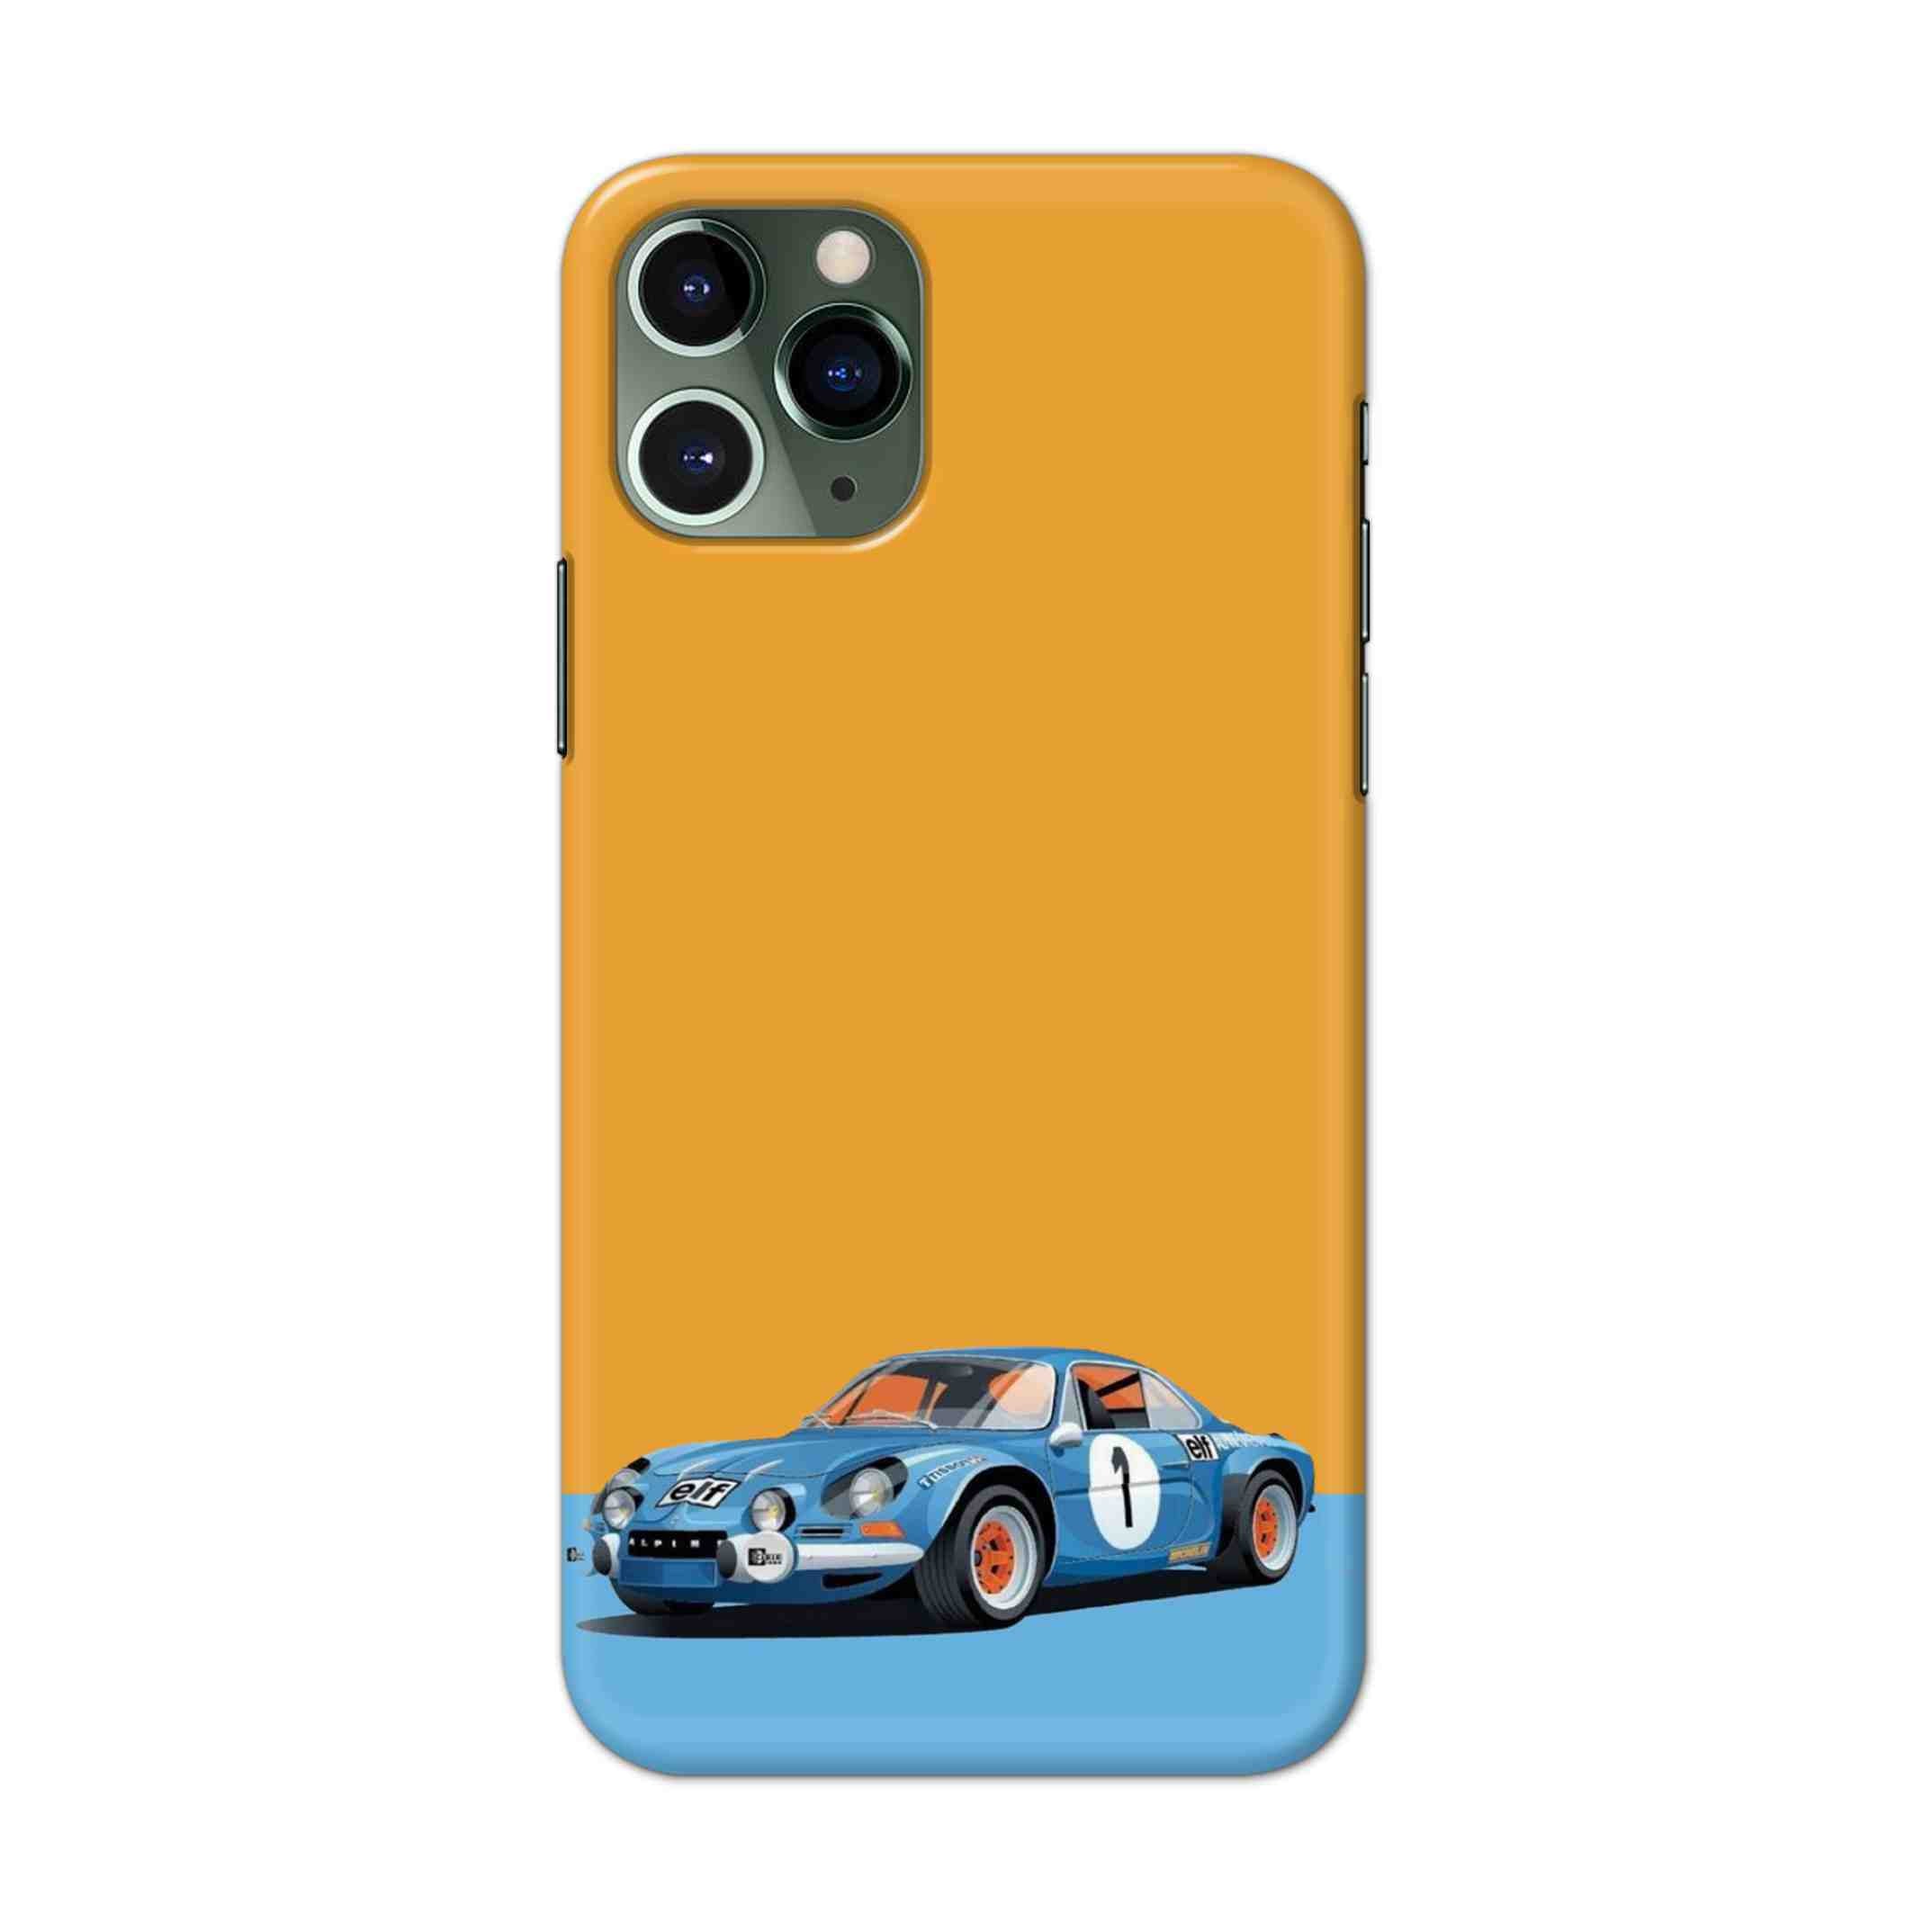 Buy Ferrari F1 Hard Back Mobile Phone Case/Cover For iPhone 11 Pro Online